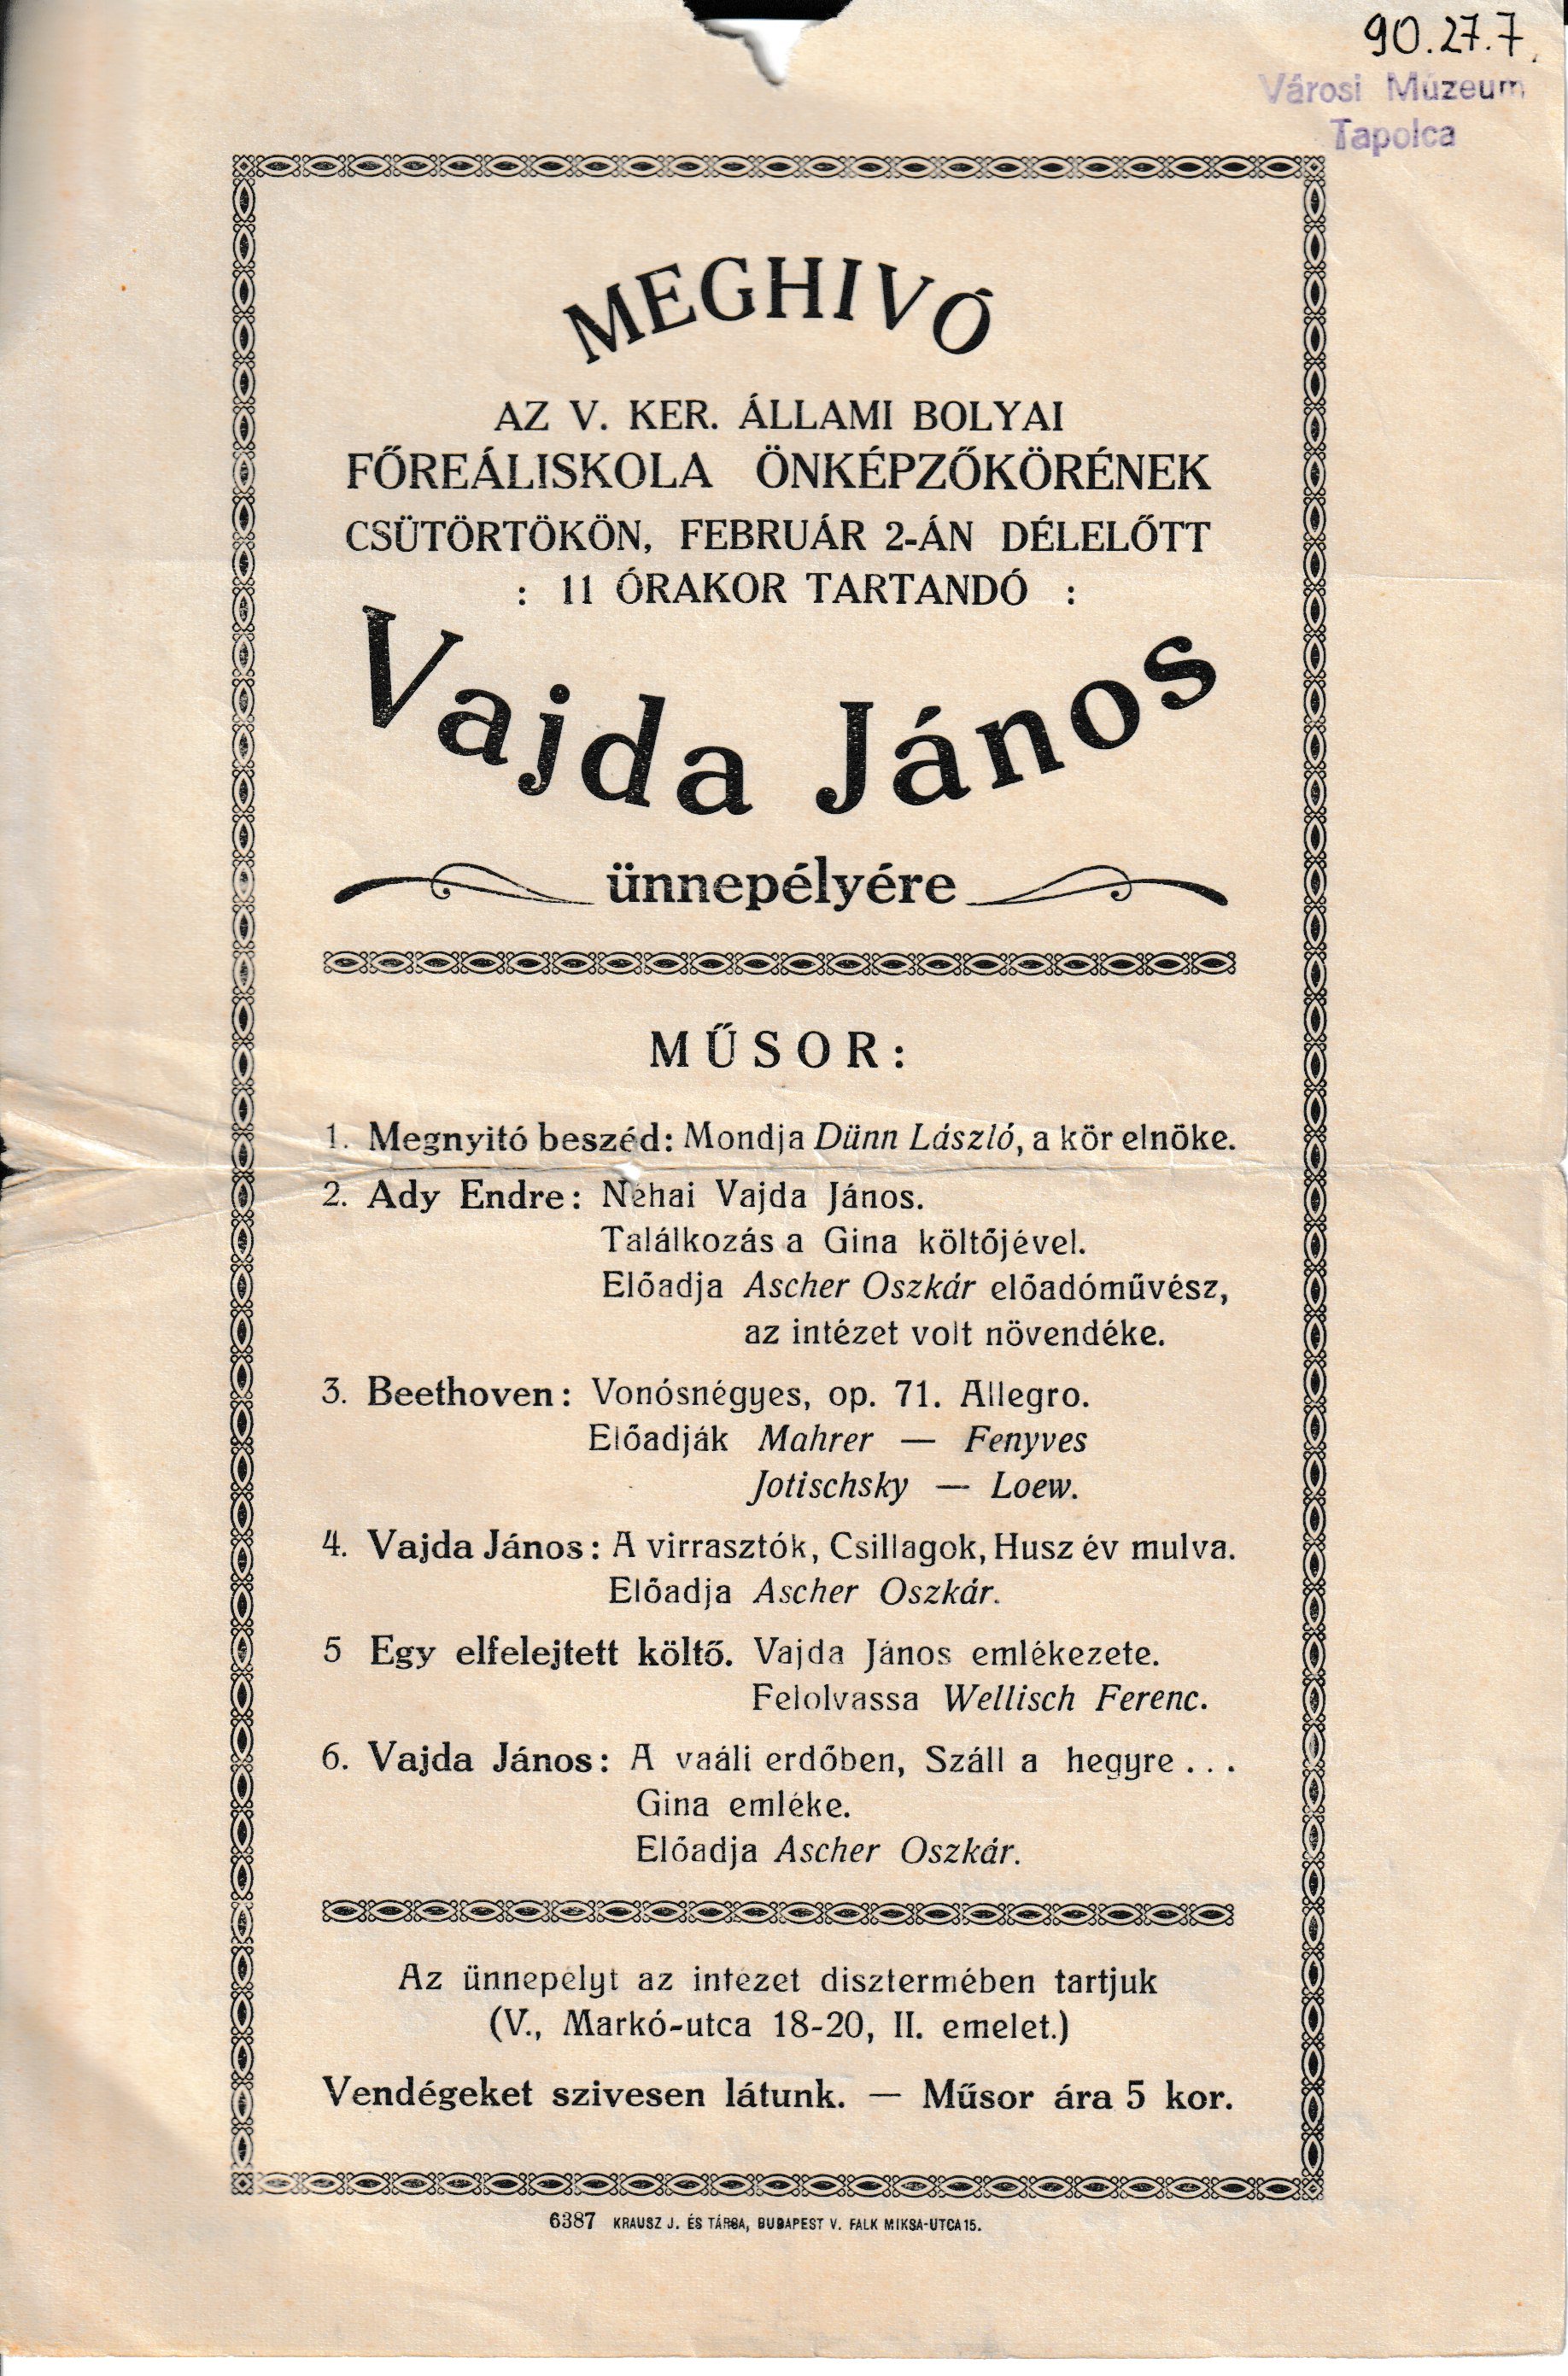 Meghívó iskolai Vajda János ünnepélyre (Tapolcai Városi Múzeum CC BY-NC-SA)